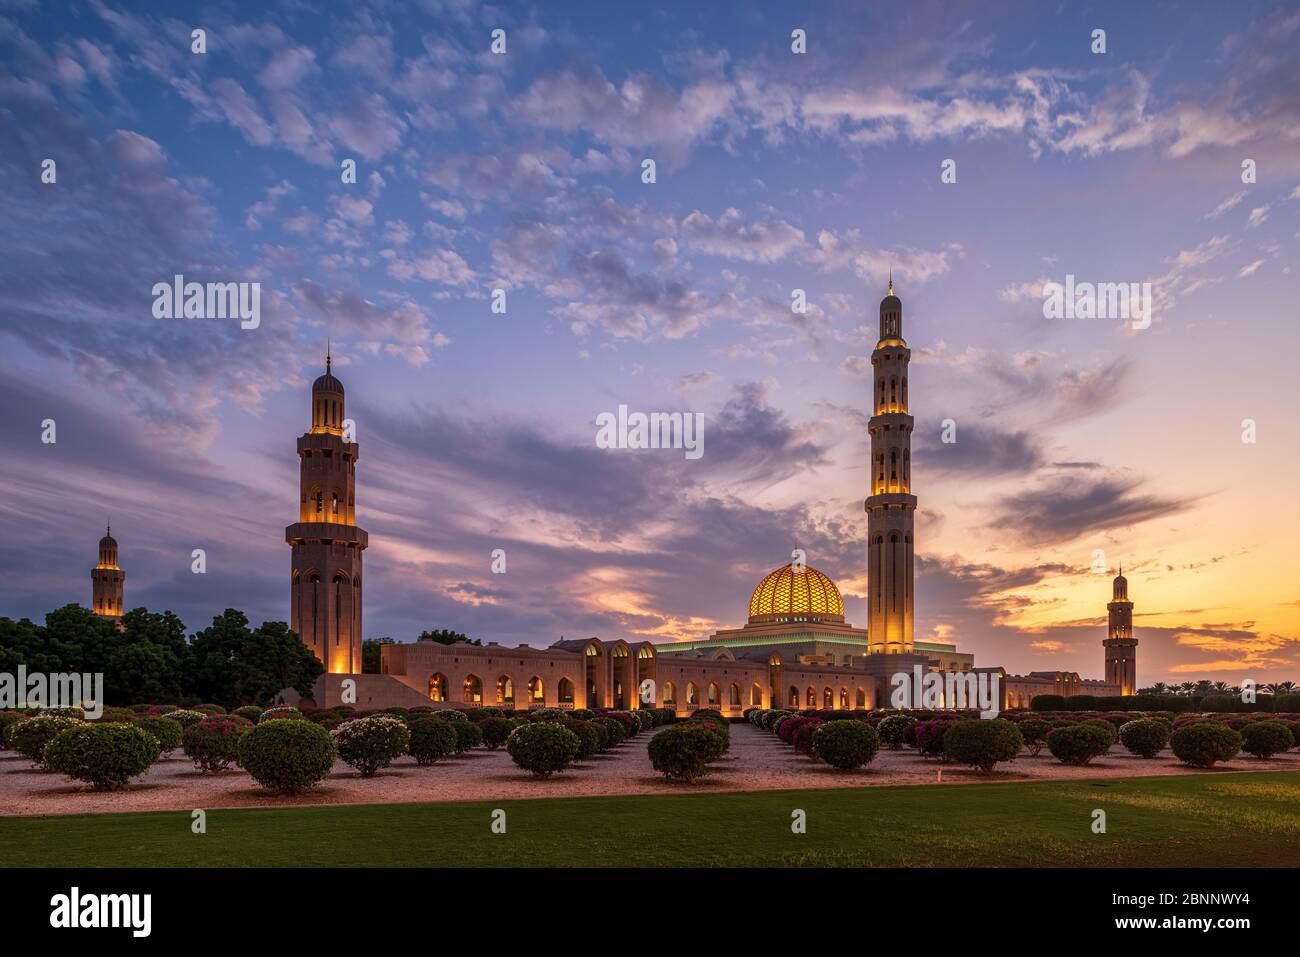 Moschee, Gebetshaus, Kuppel, Minarett, Park, Garten, Dämmerung, Beleuchtung, Abendhimmel, Wolken, Wolkenlandschaft, Bäume Stockfoto